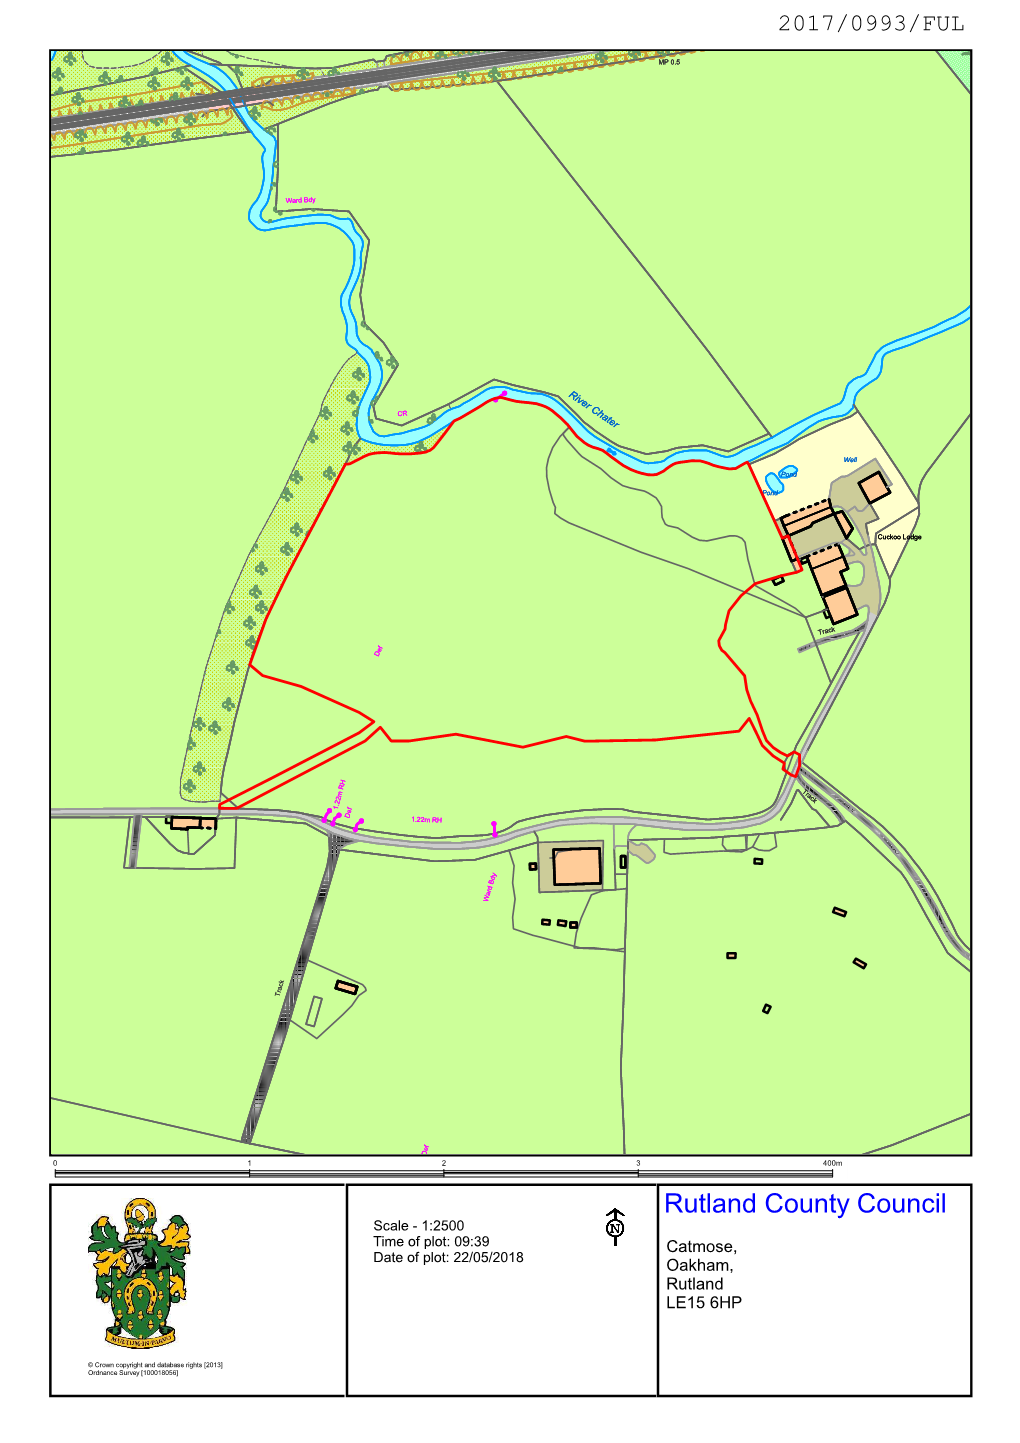 Rutland County Council Scale - 1:2500 Time of Plot: 09:39 Catmose, Date of Plot: 22/05/2018 Oakham, Rutland LE15 6HP